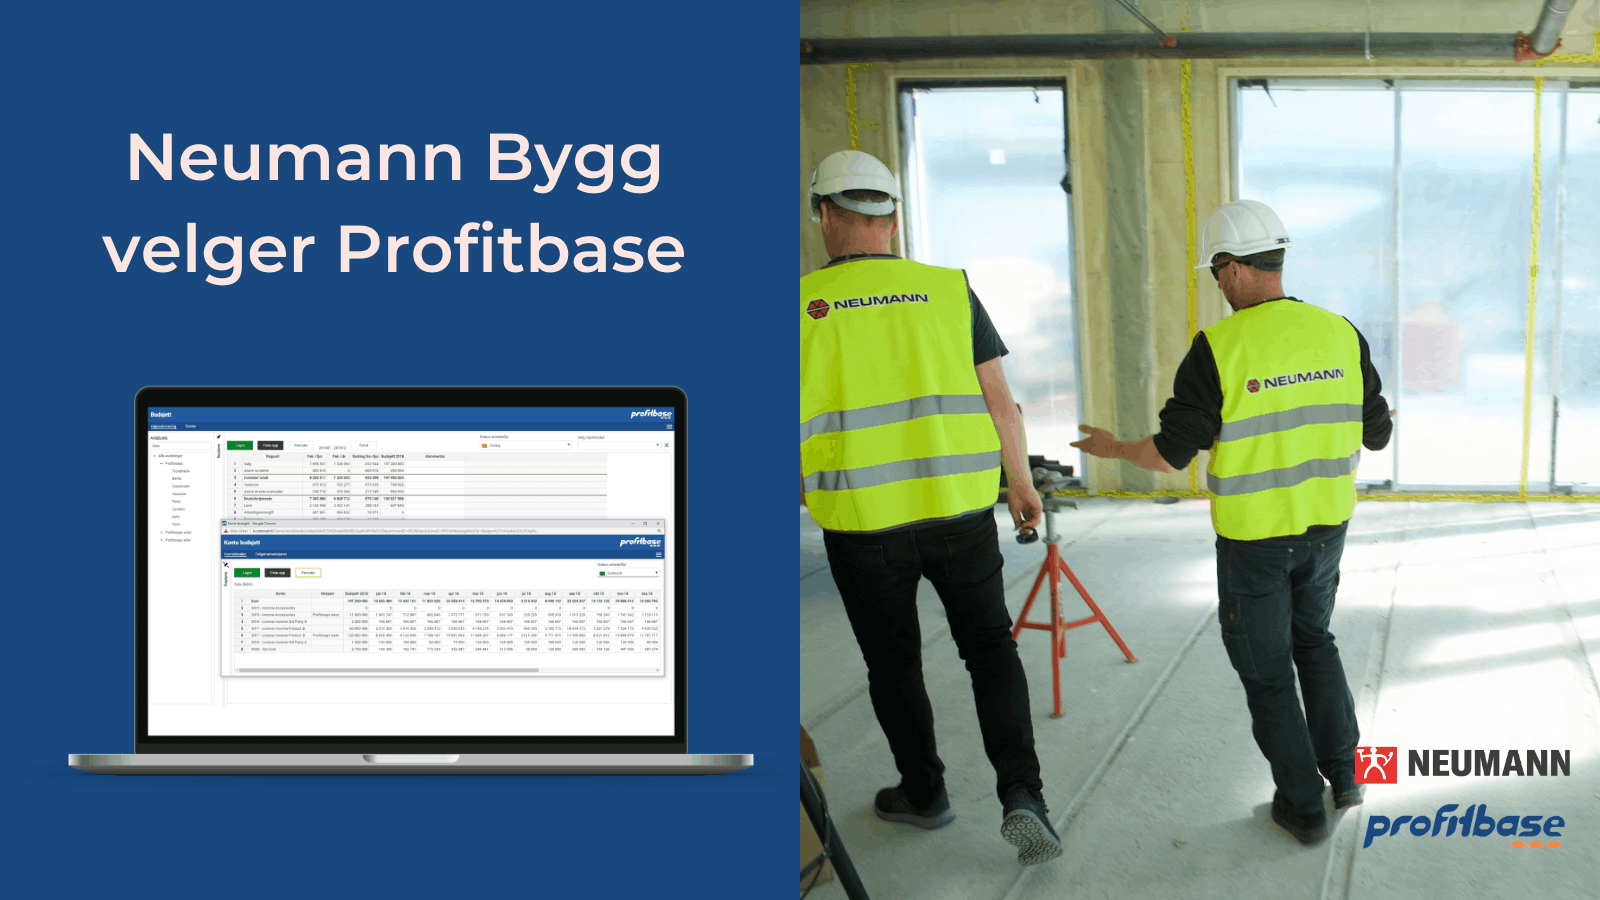 Neumann Bygg chooses Profitbase Planner